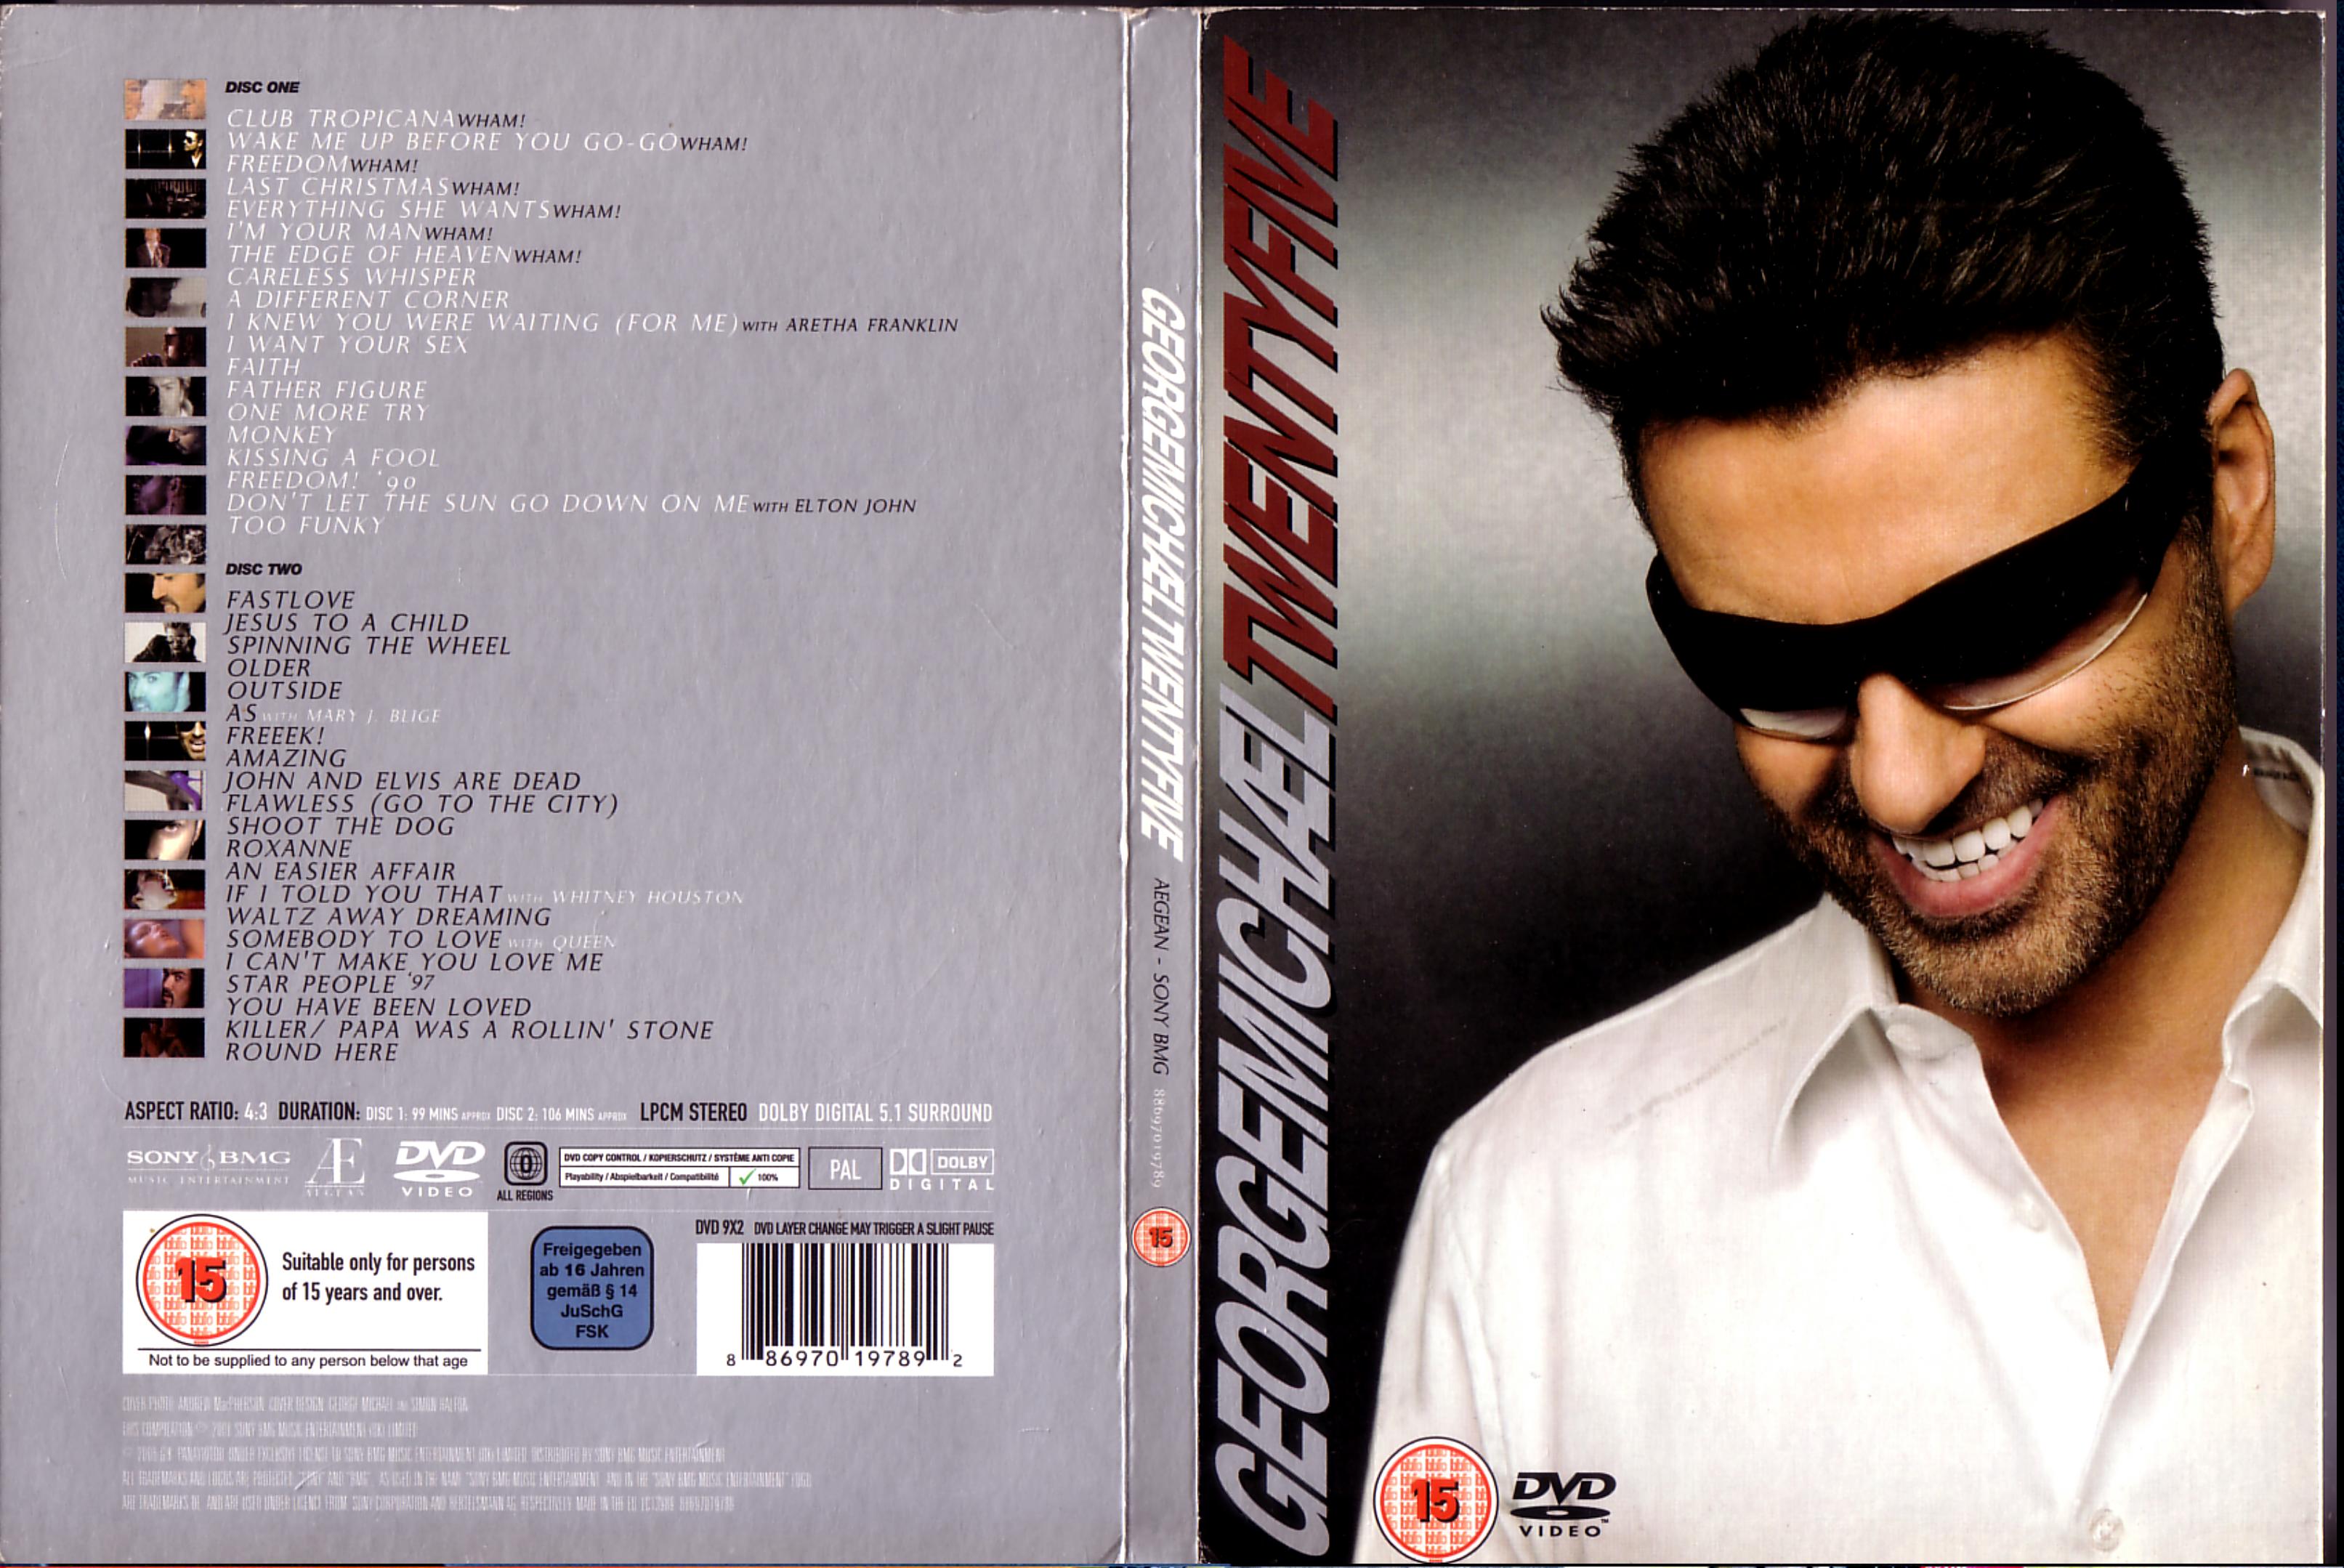 Jaquette DVD George Michael twenty five